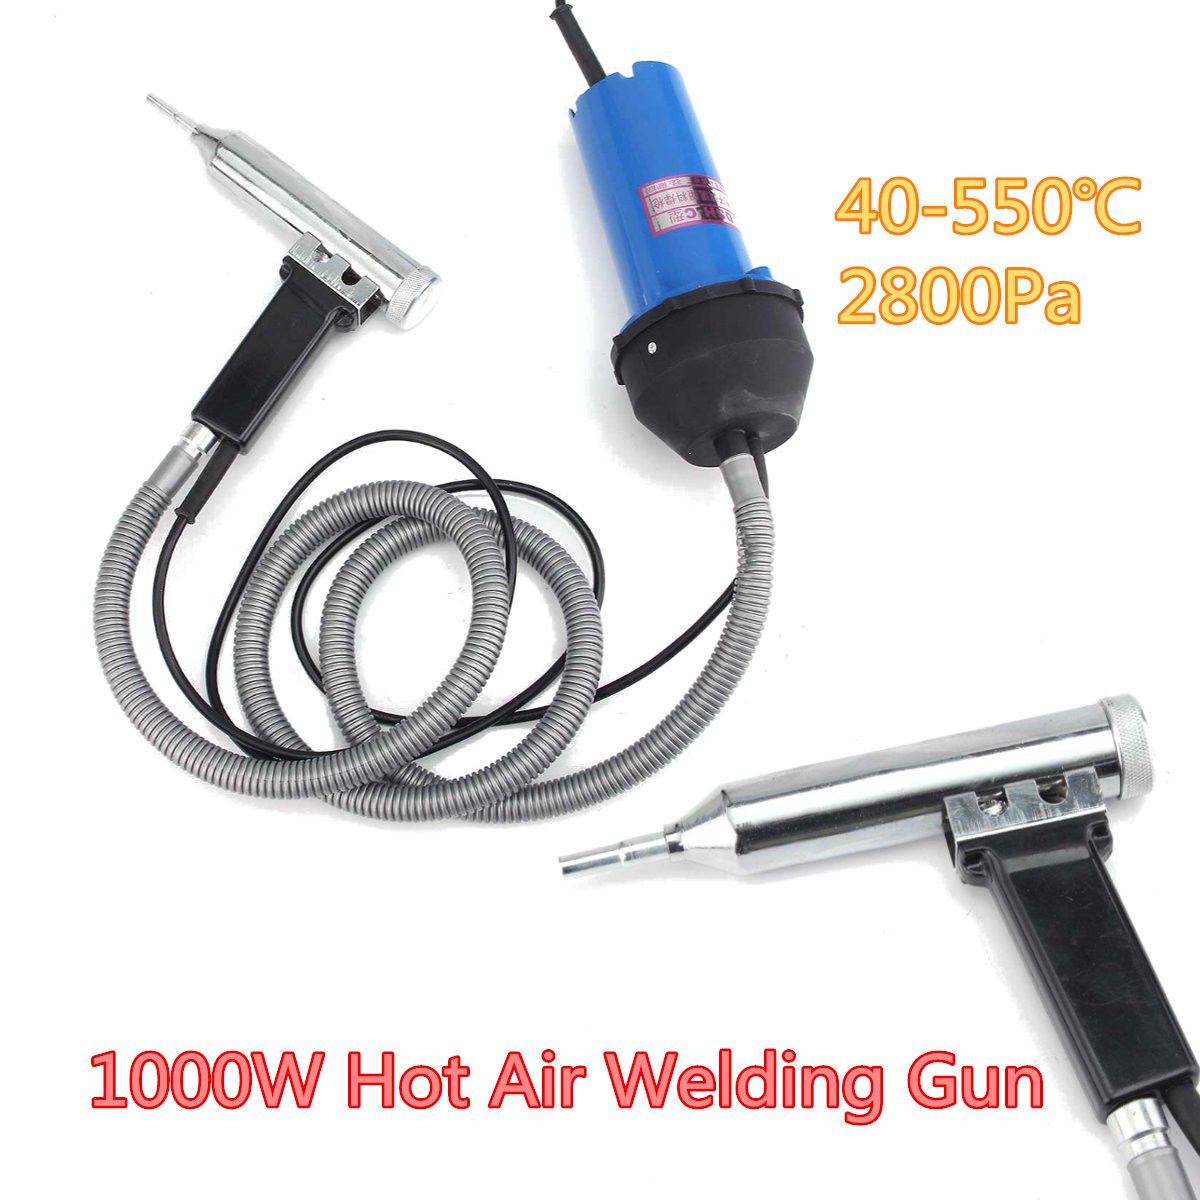 1000W-Split-Plastic-Welding-Heat-Gun-Torch-Hot-Air-Welding-Tool-40-550-2800Pa-1195589